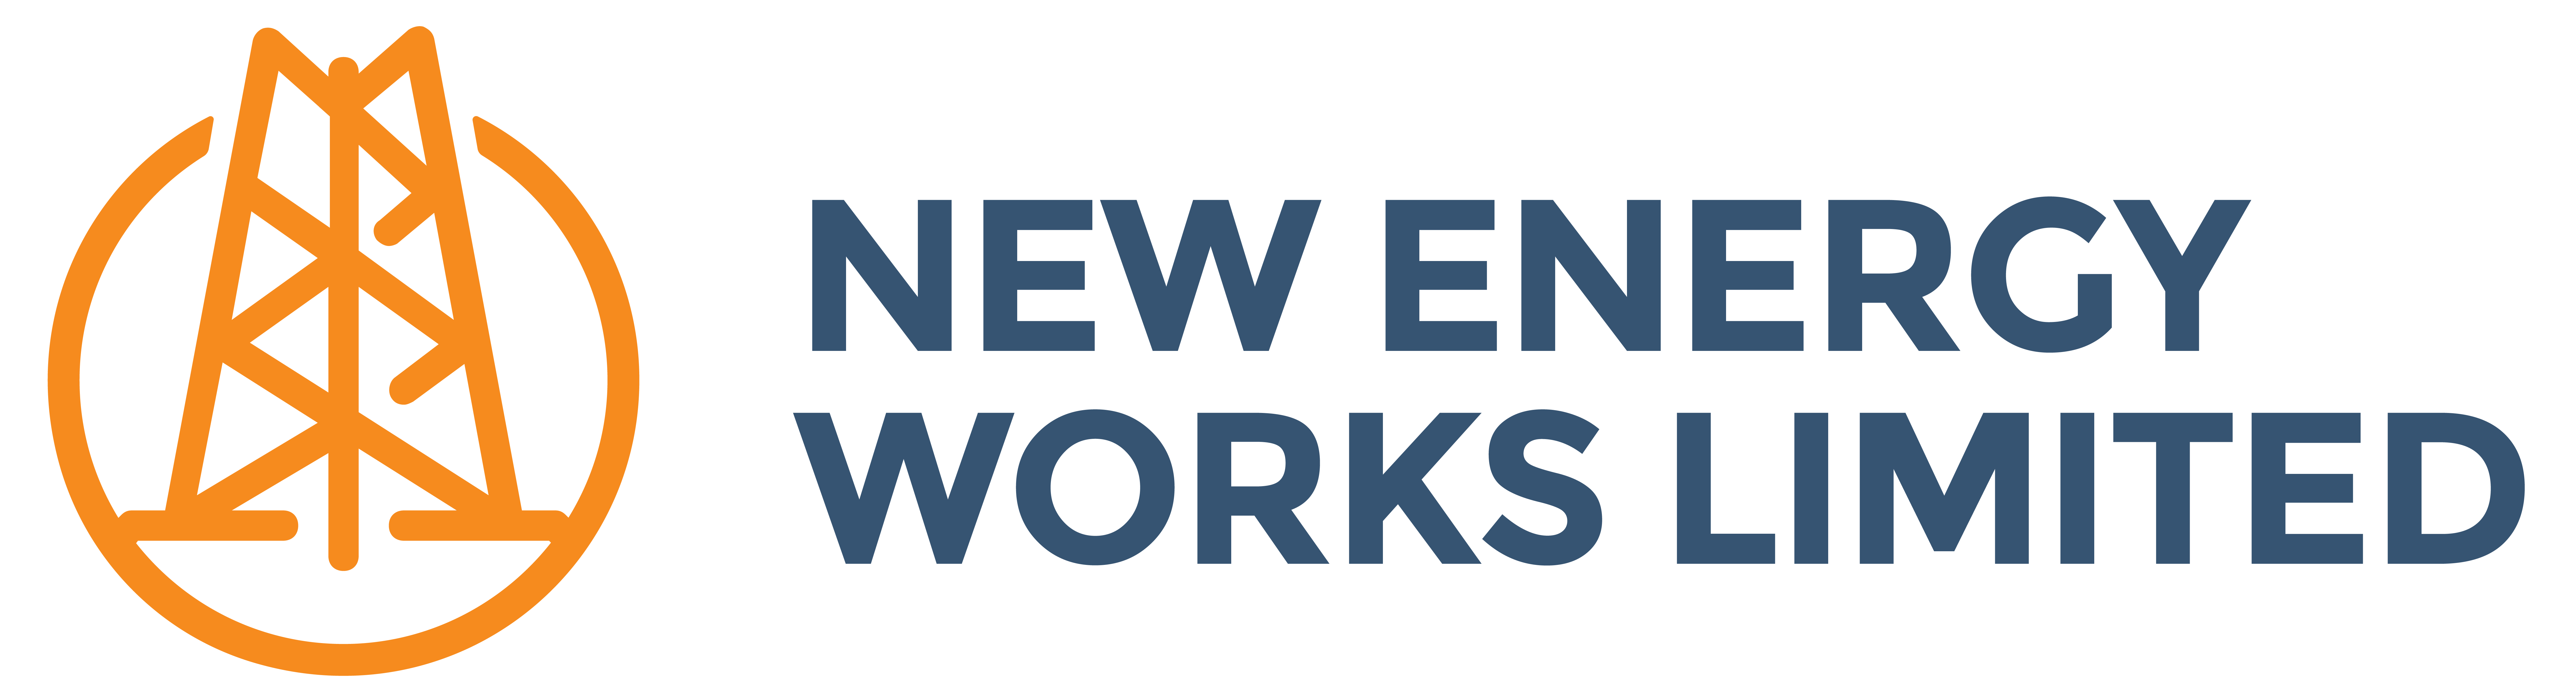 New Energy Works Ltd.